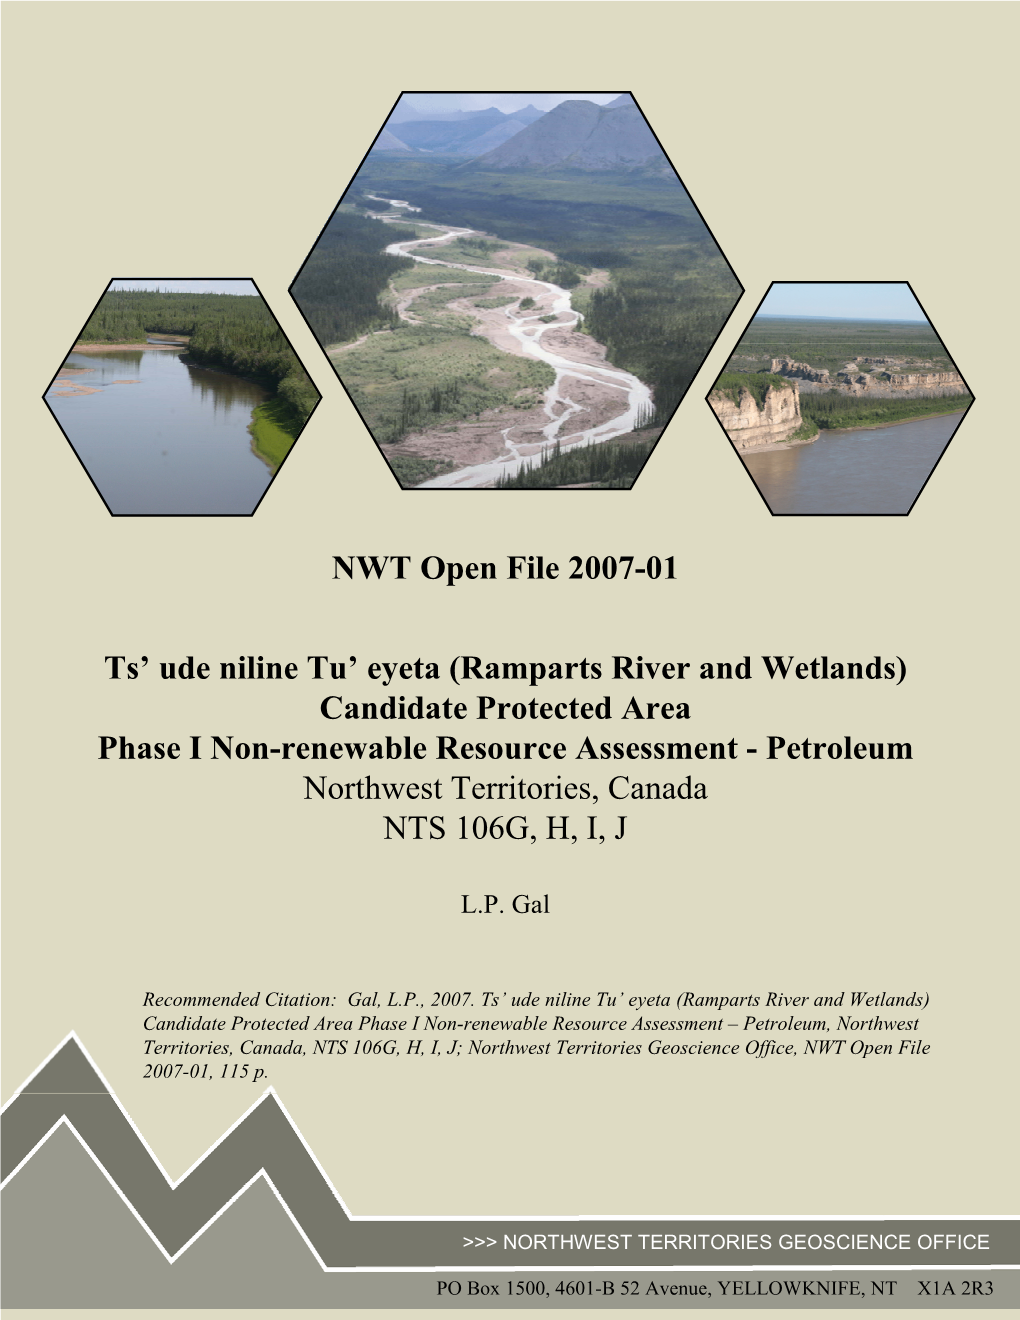 NWT Open File 2007-01 Ts' Ude Niline Tu' Eyeta (Ramparts River And